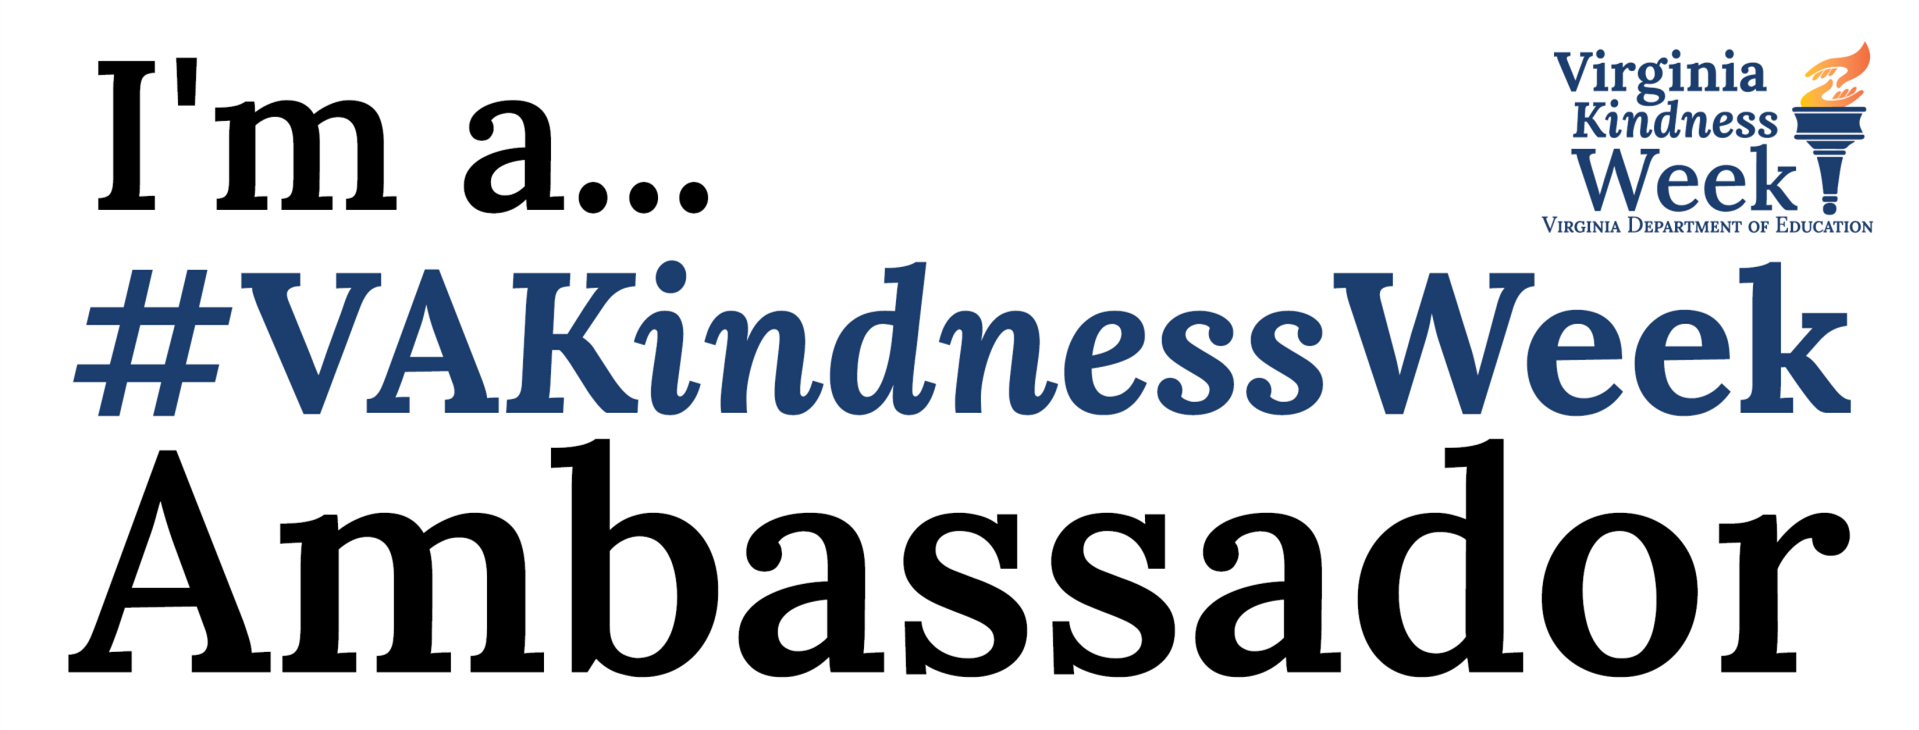 I am an ambassador of kindness